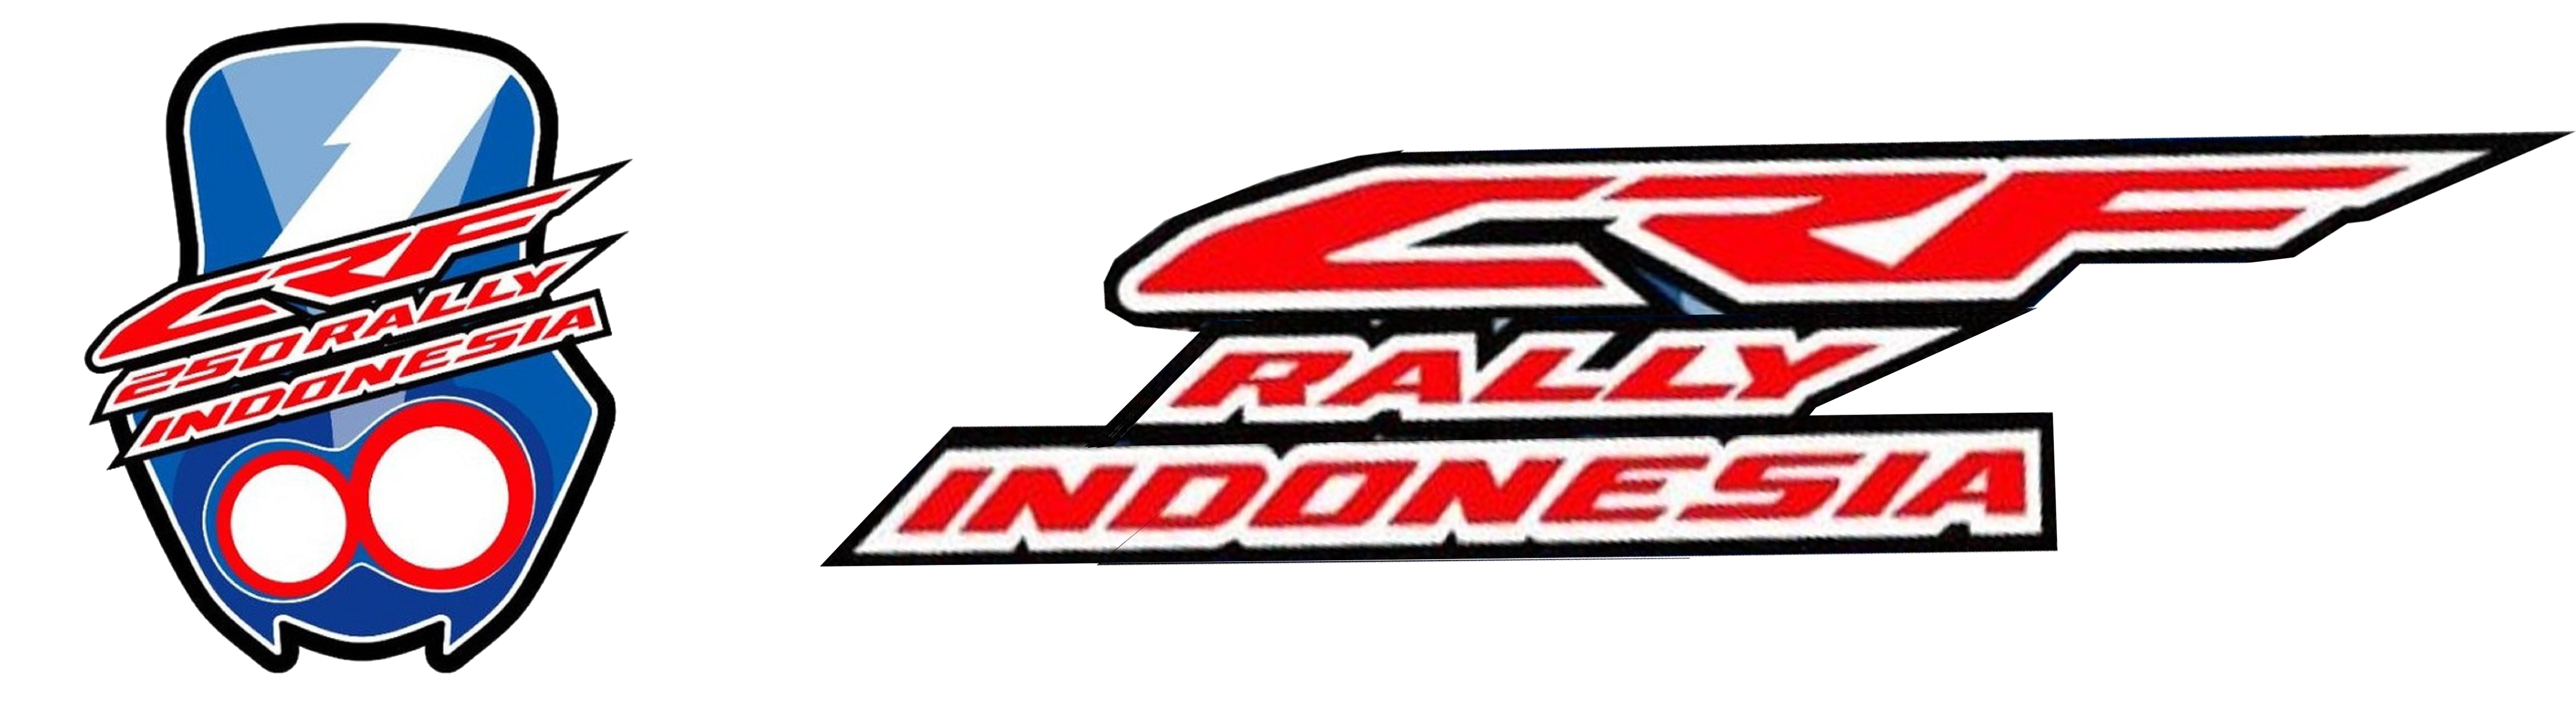 CRF RALLY INDONESIA